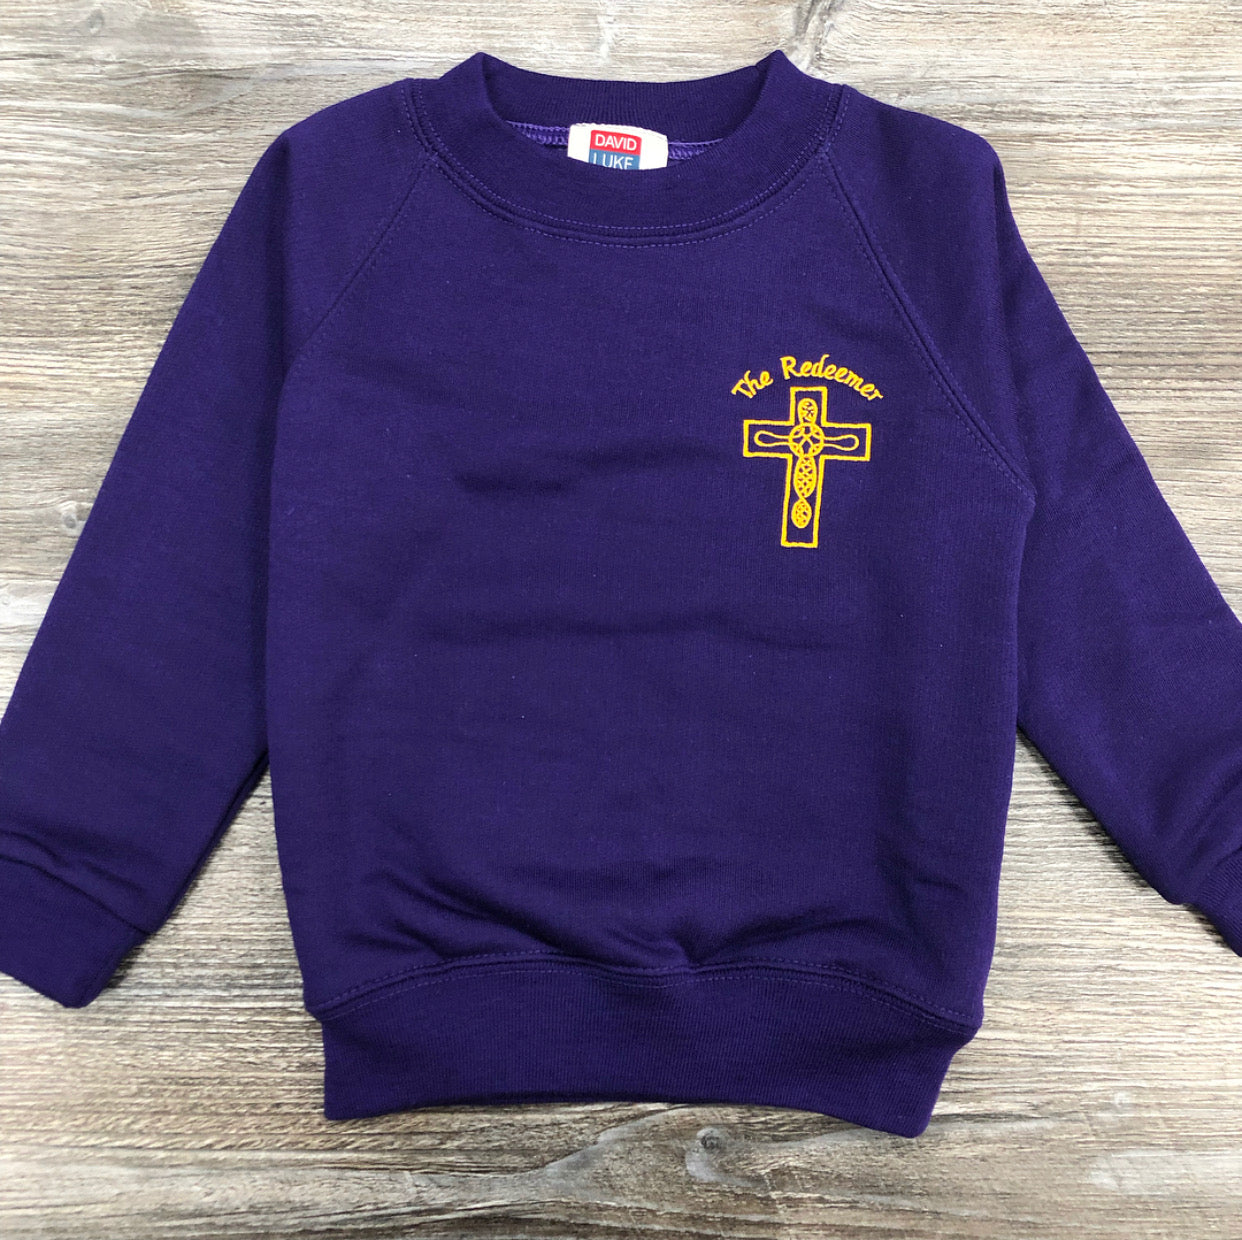 The Redeemer purple crew neck sweatshirt.